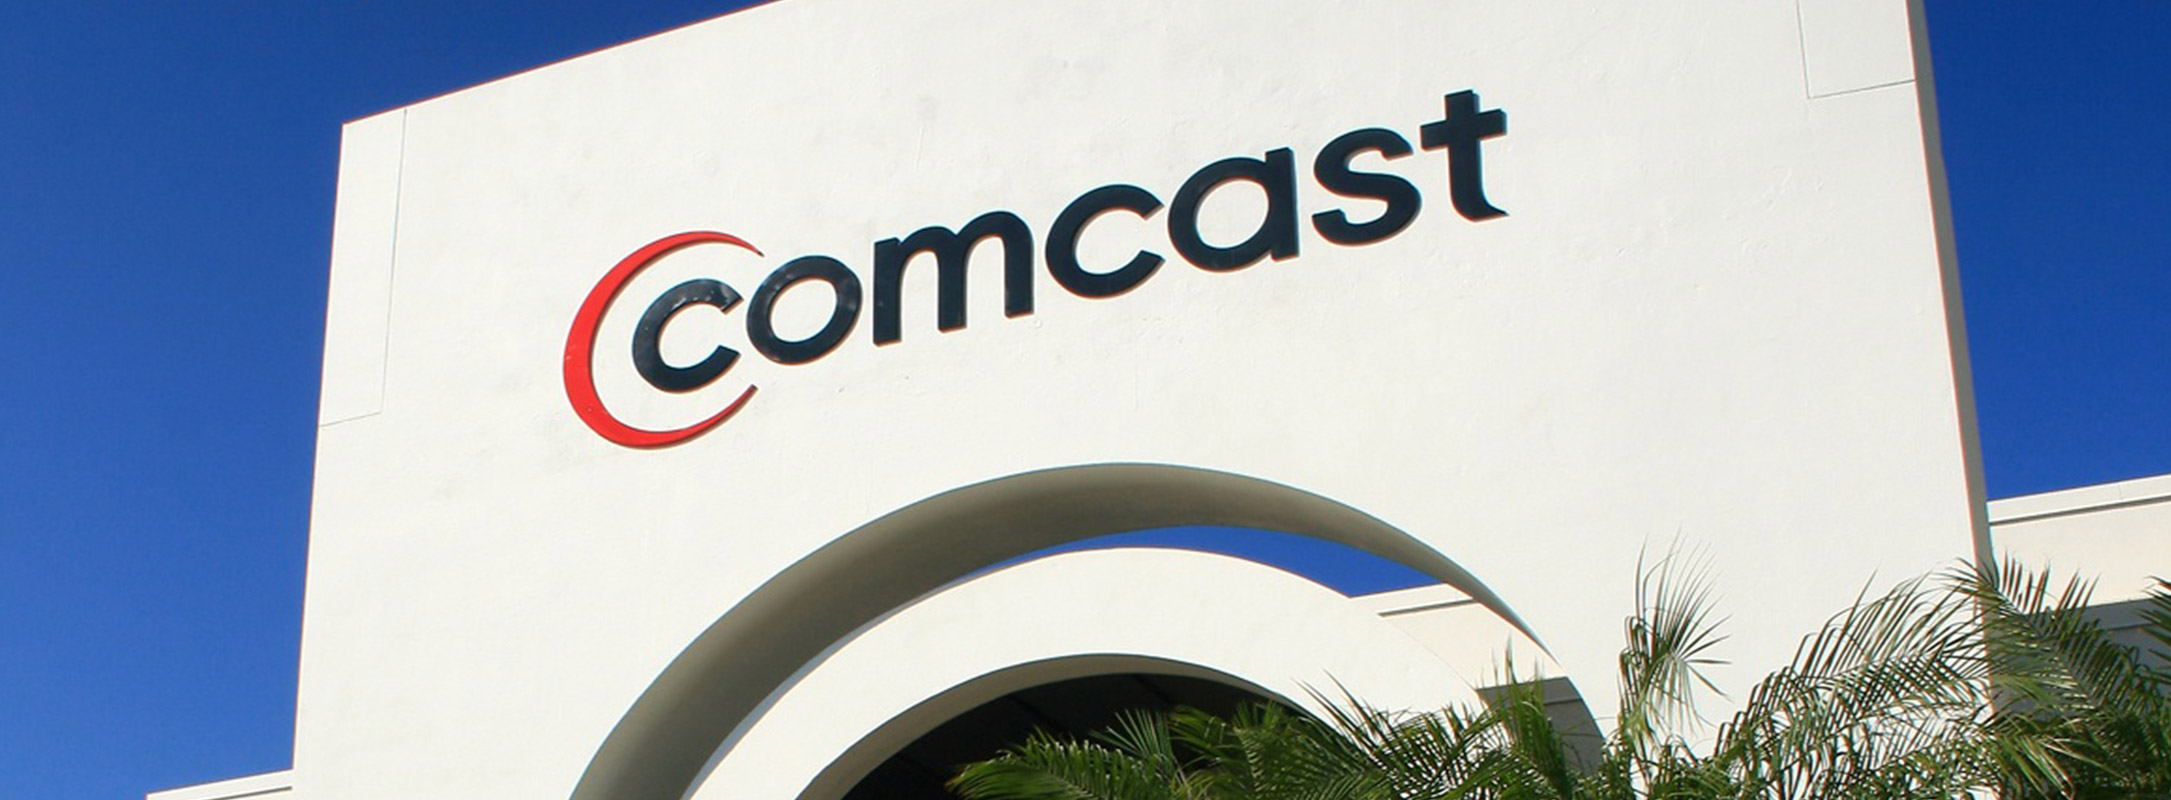 Comcast Corporate Center, Boca Raton